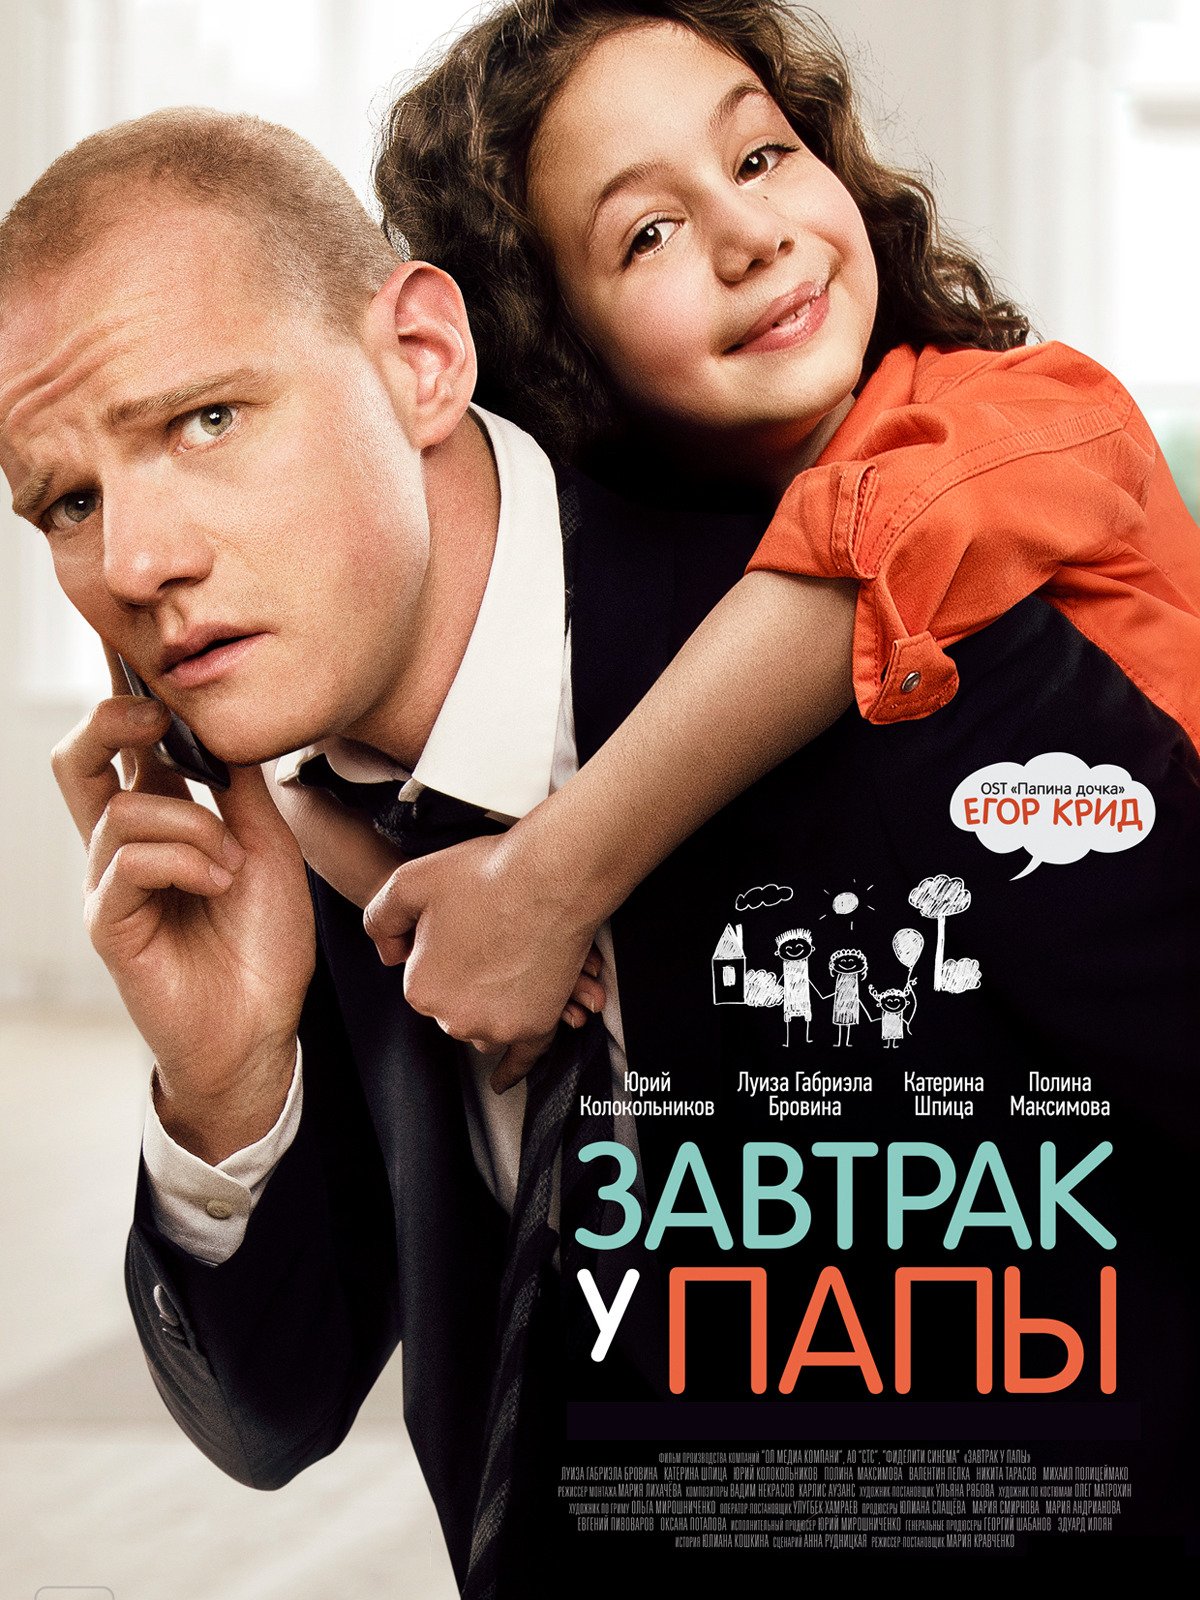 Movie poster